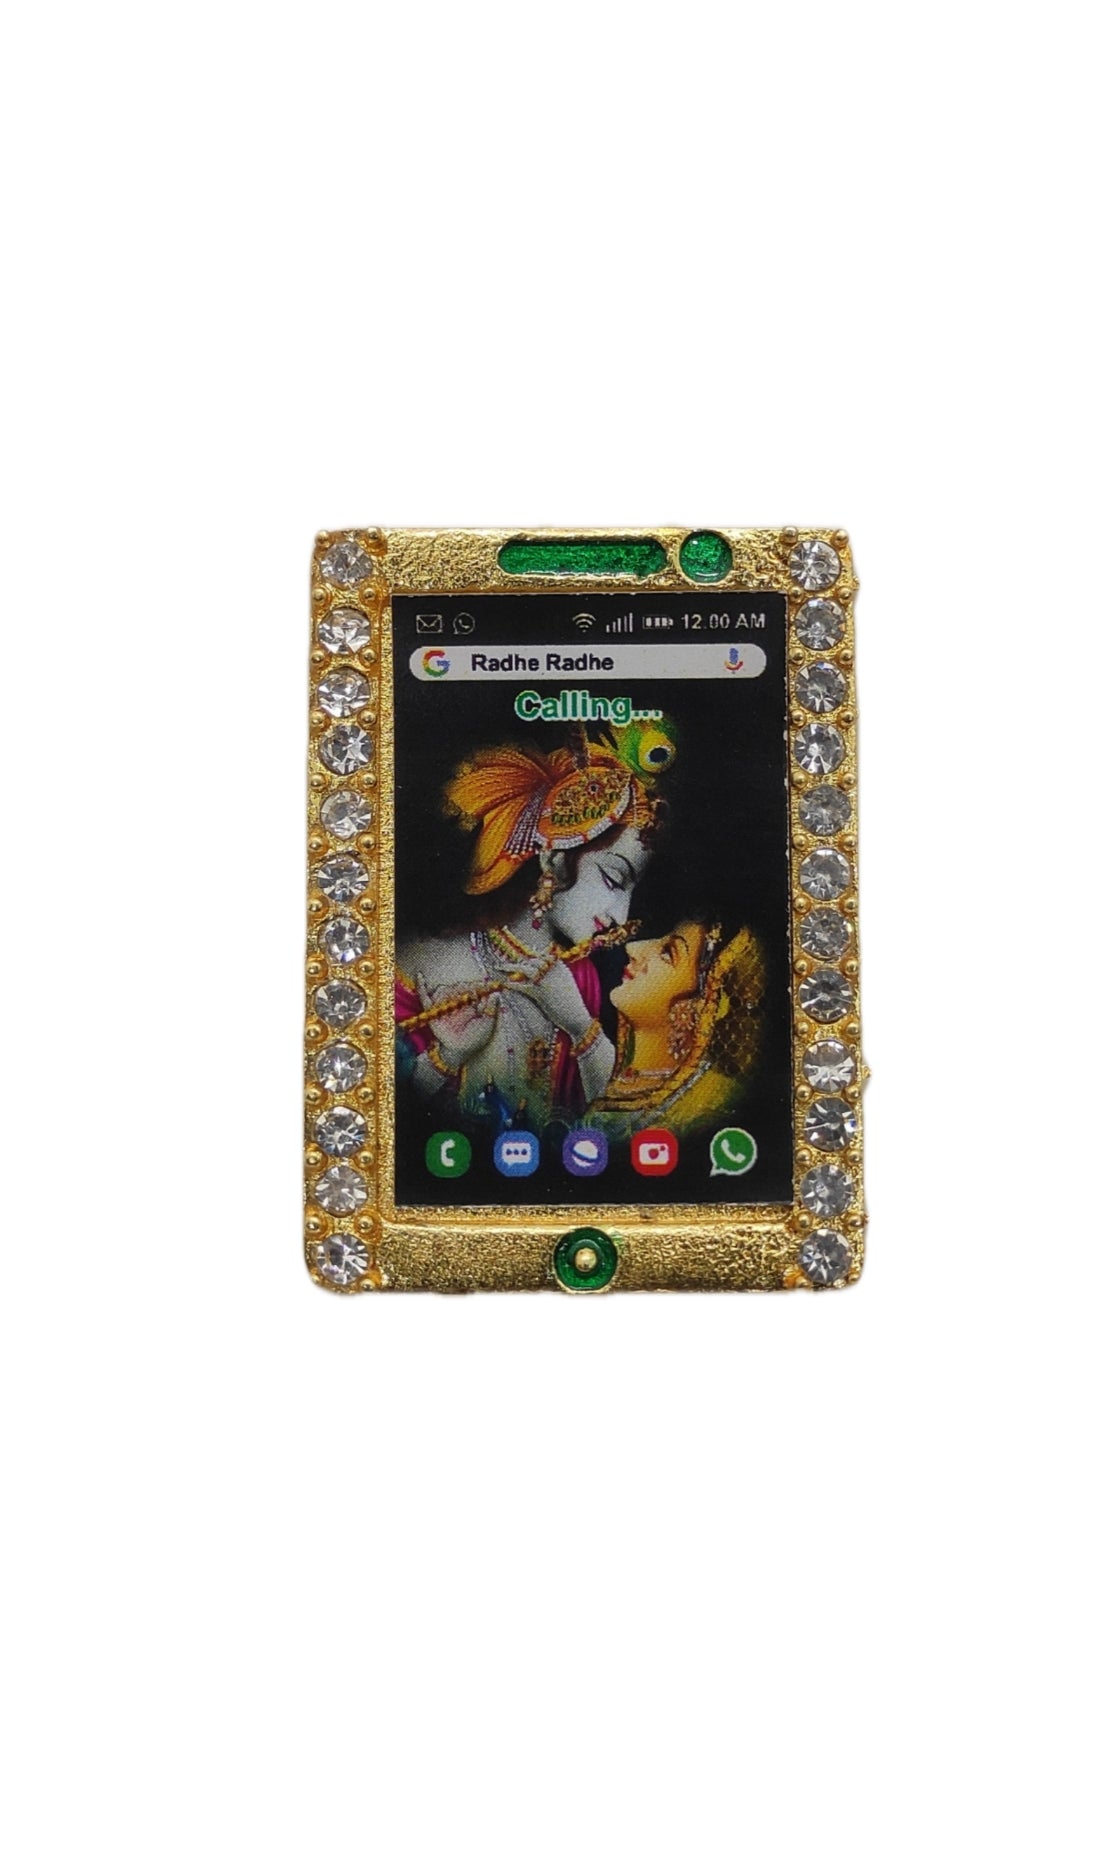 smartphone toy for laddu gopal ji